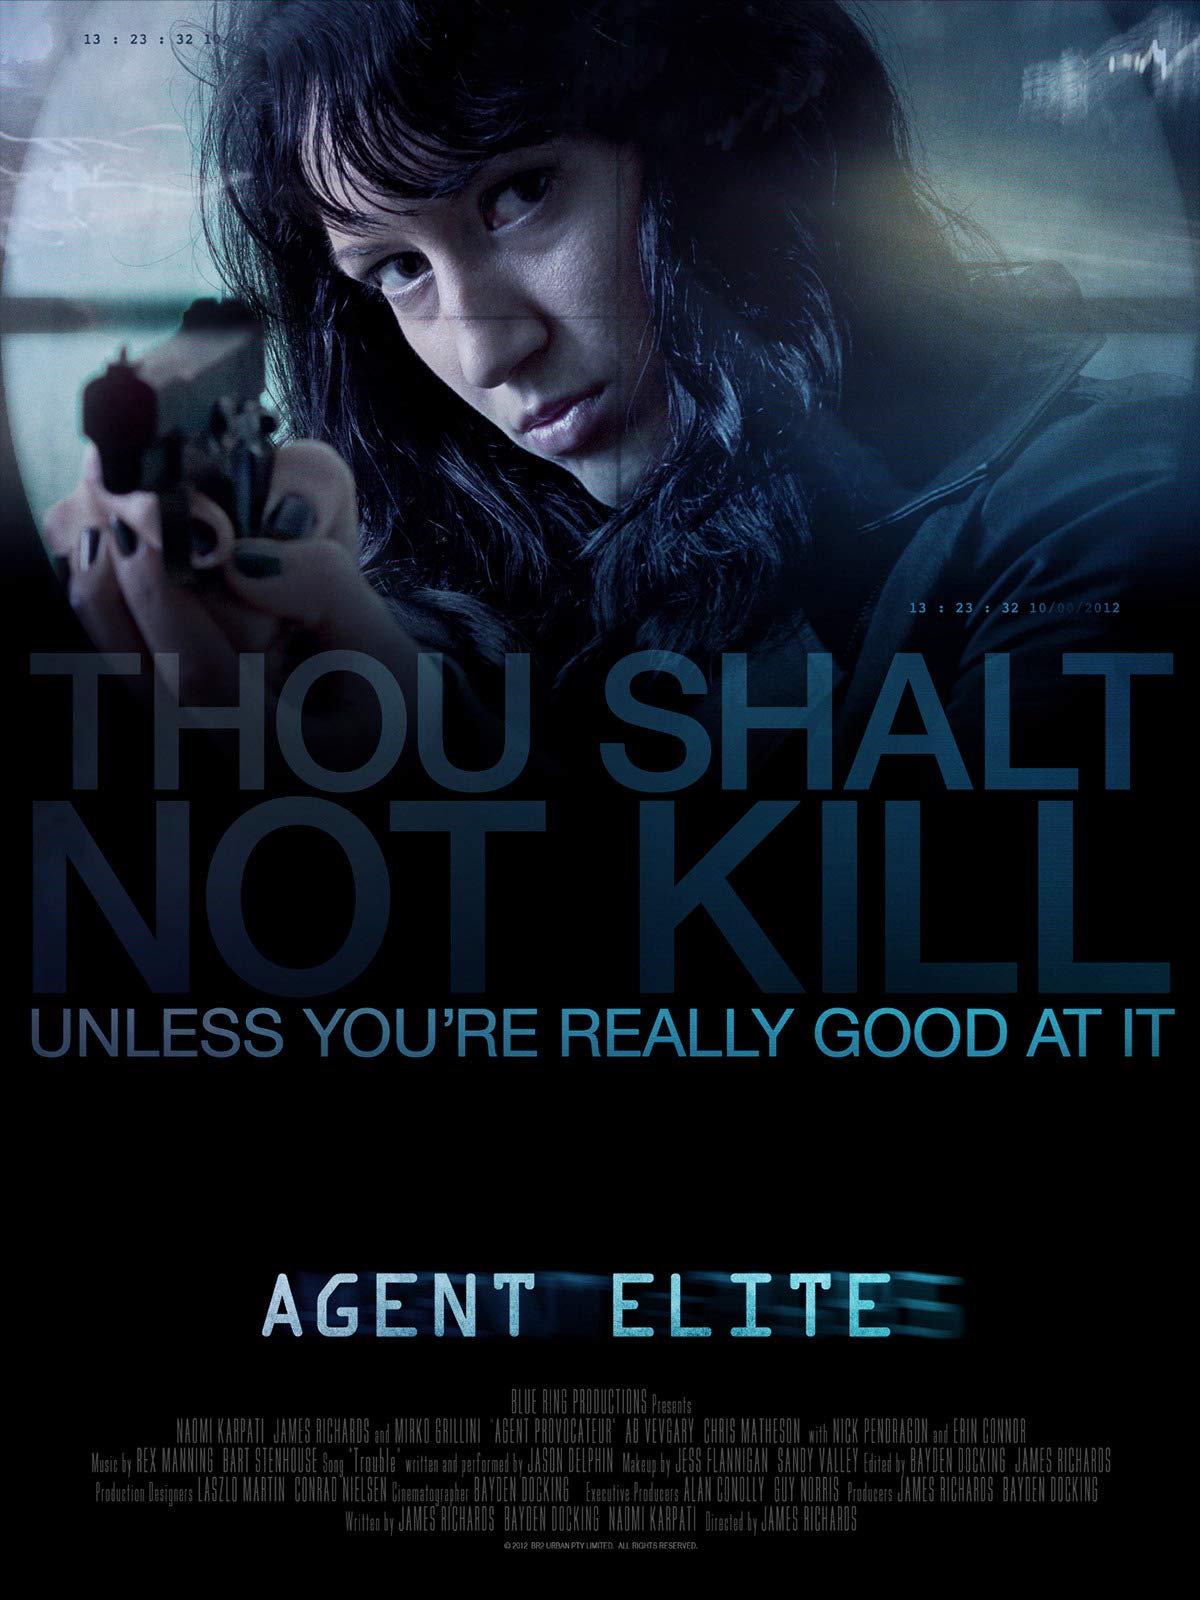 Agent Elite (2012) 480p HDRip Hindi ORG Dual Audio Movie [300MB]